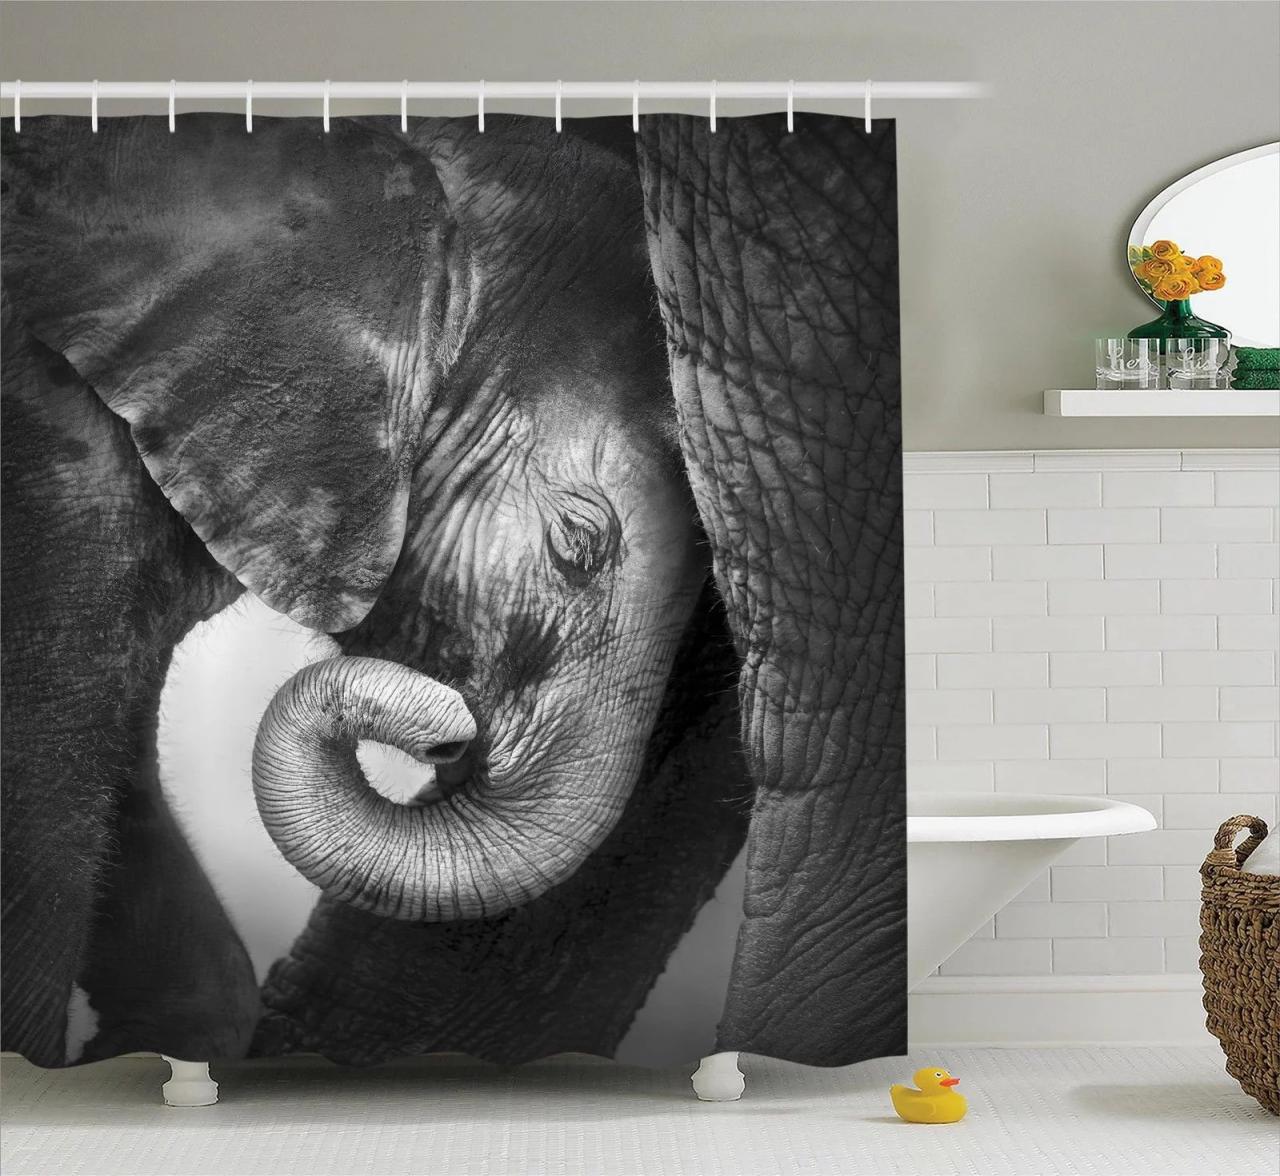 Elephants Decor Shower Curtain Set, Baby Elephant Seeking Comfort